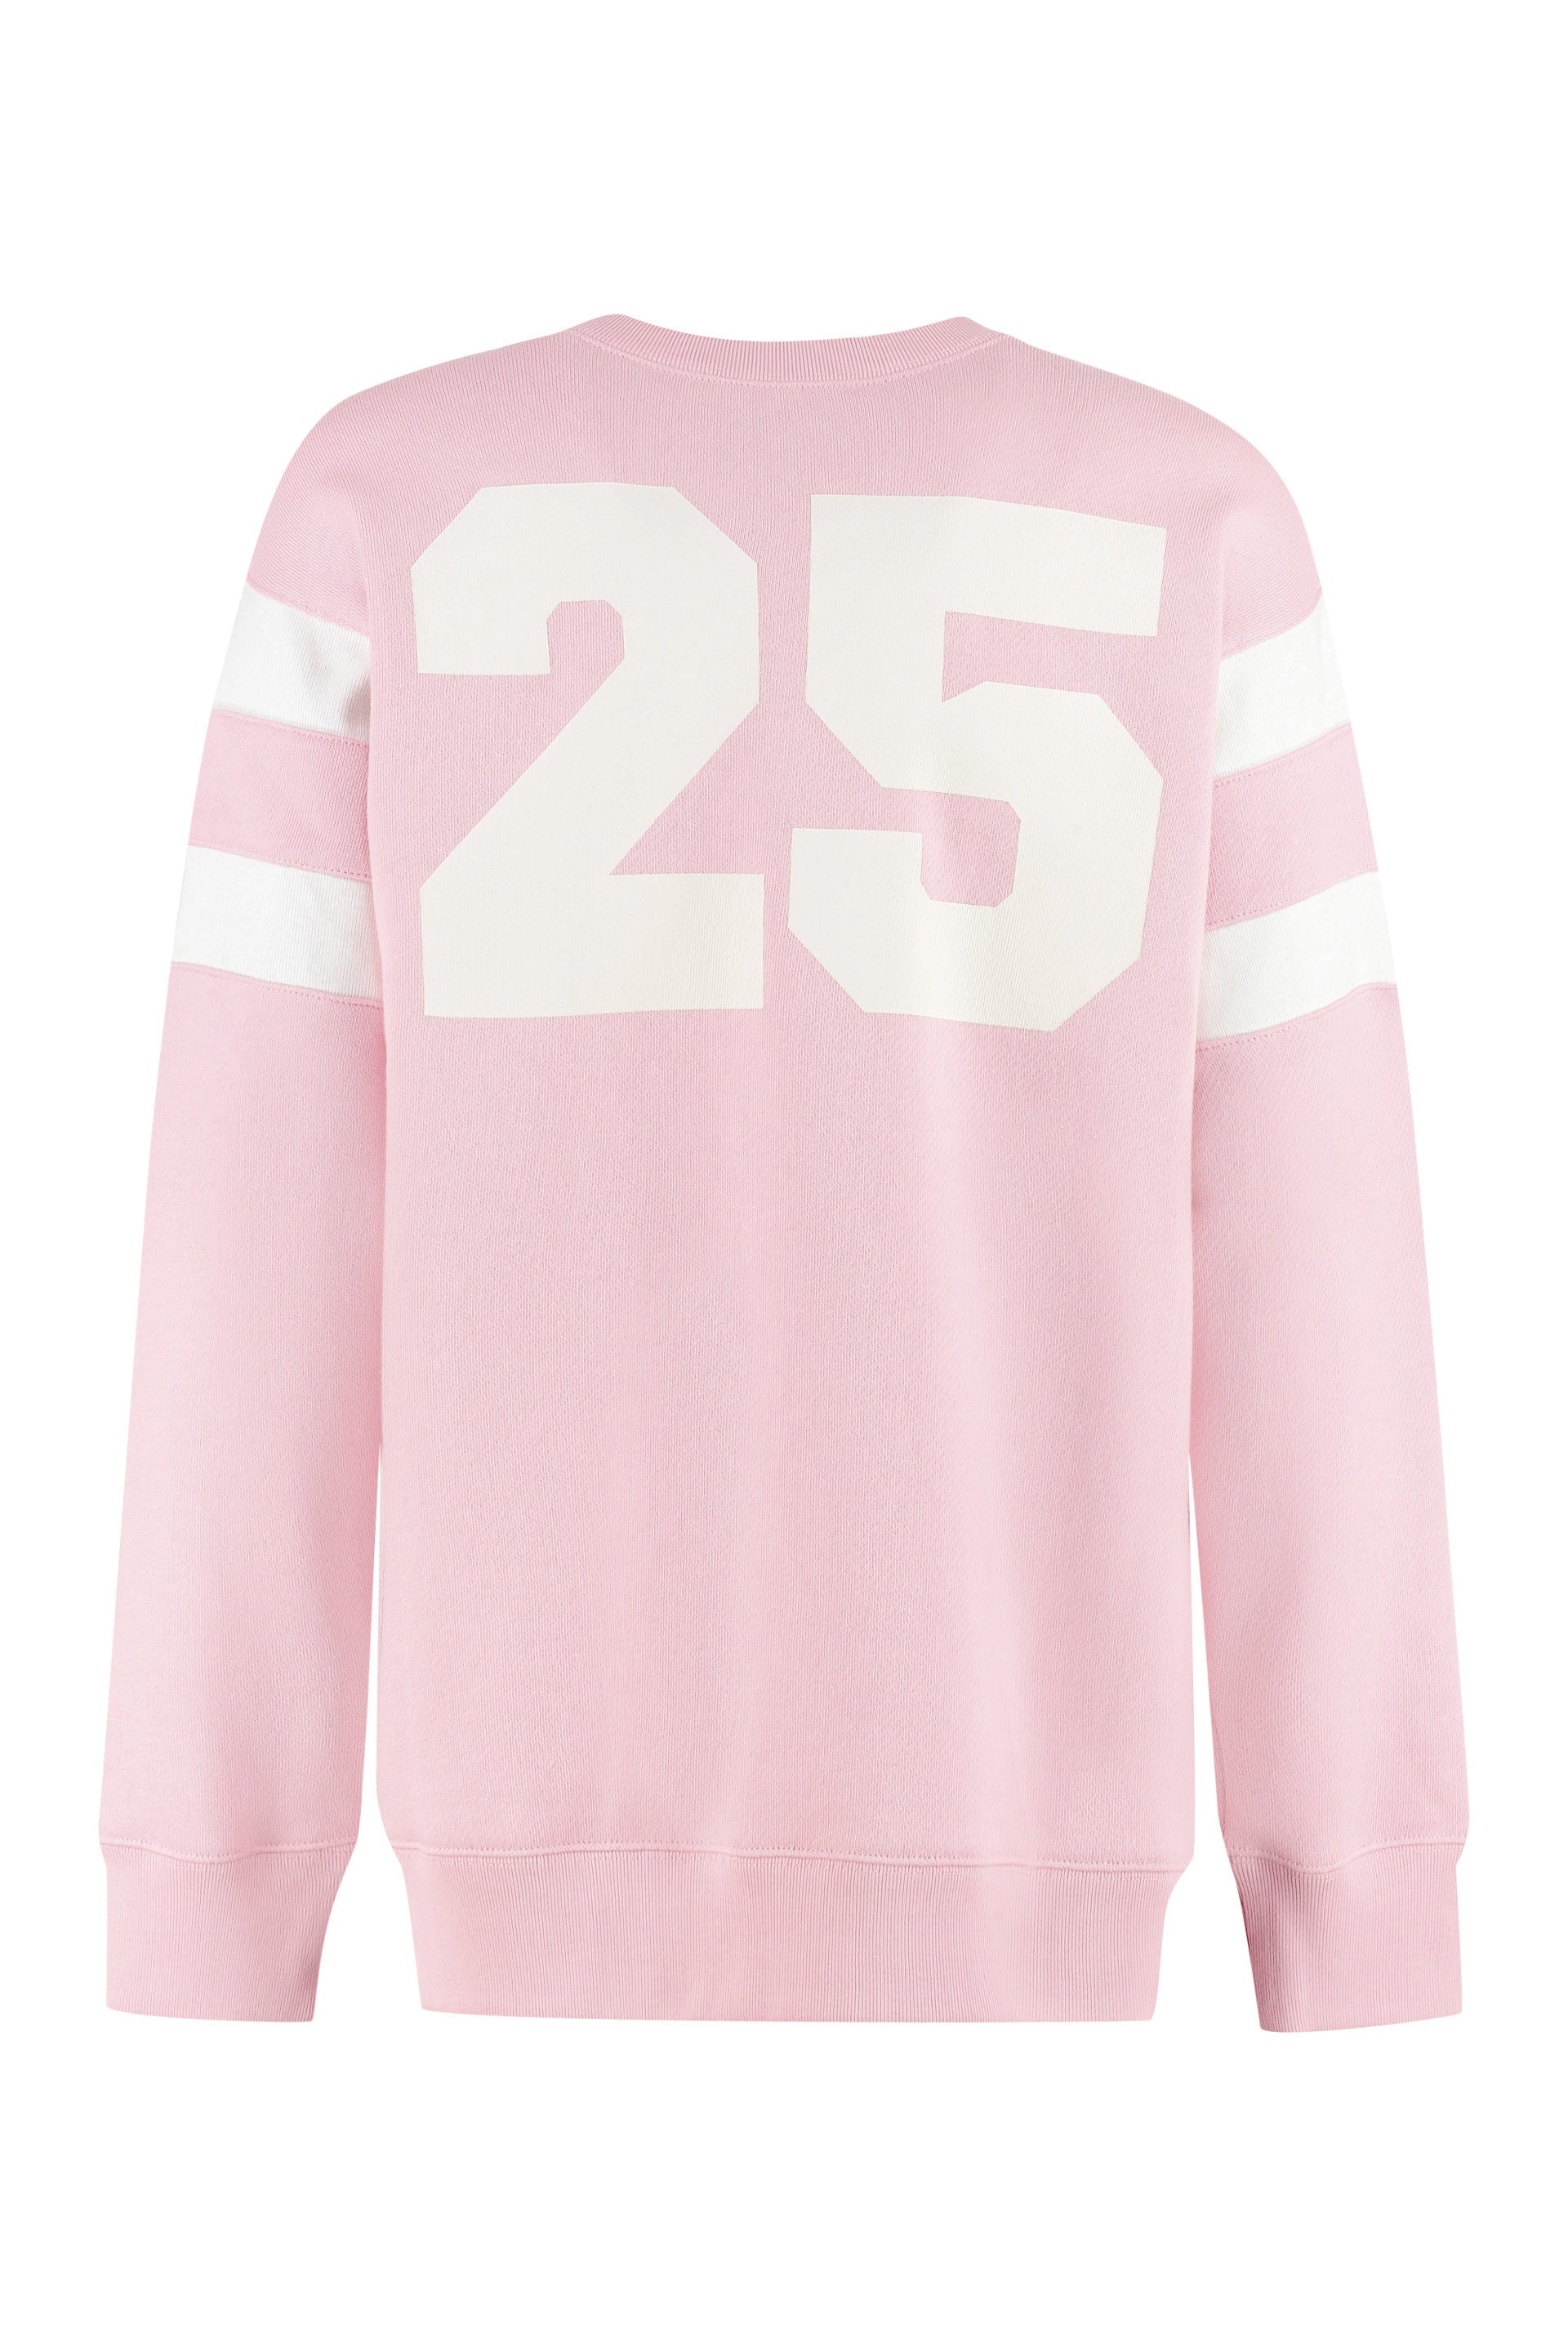 SS270_sweatshirt